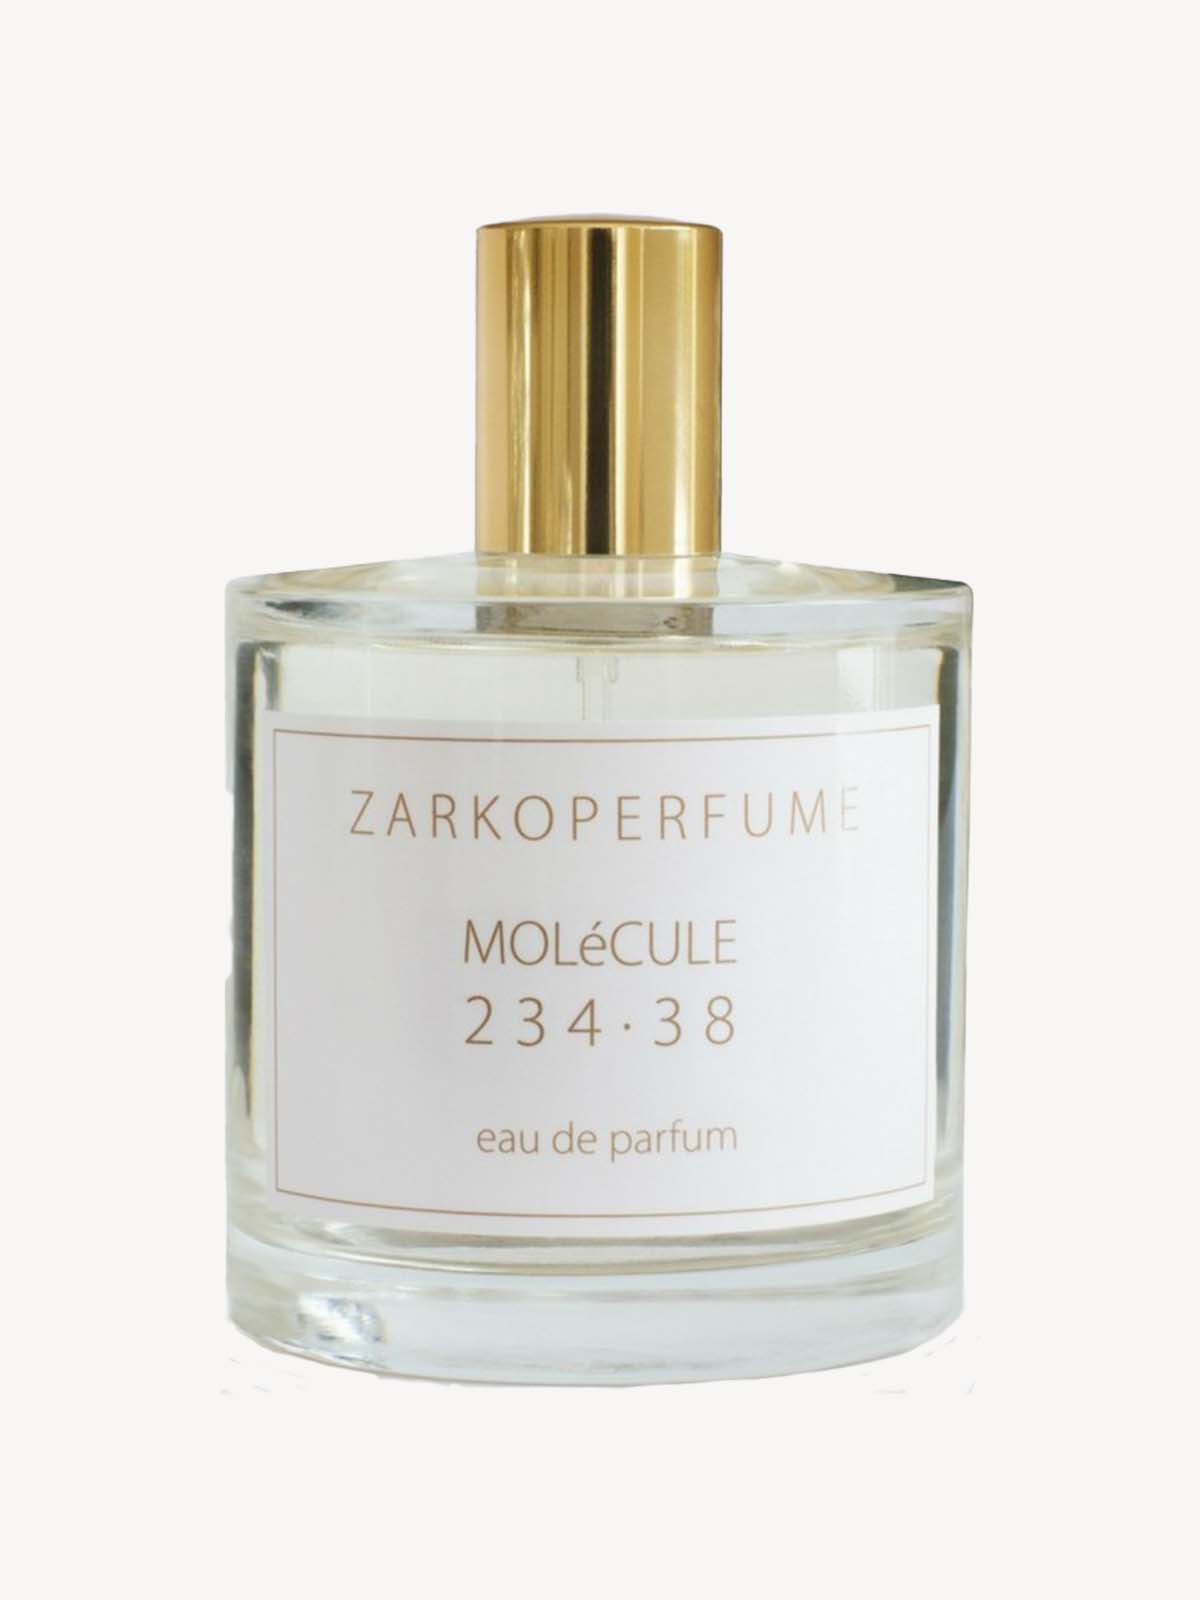 Zarkoperfume - 234.38 MOLECULE